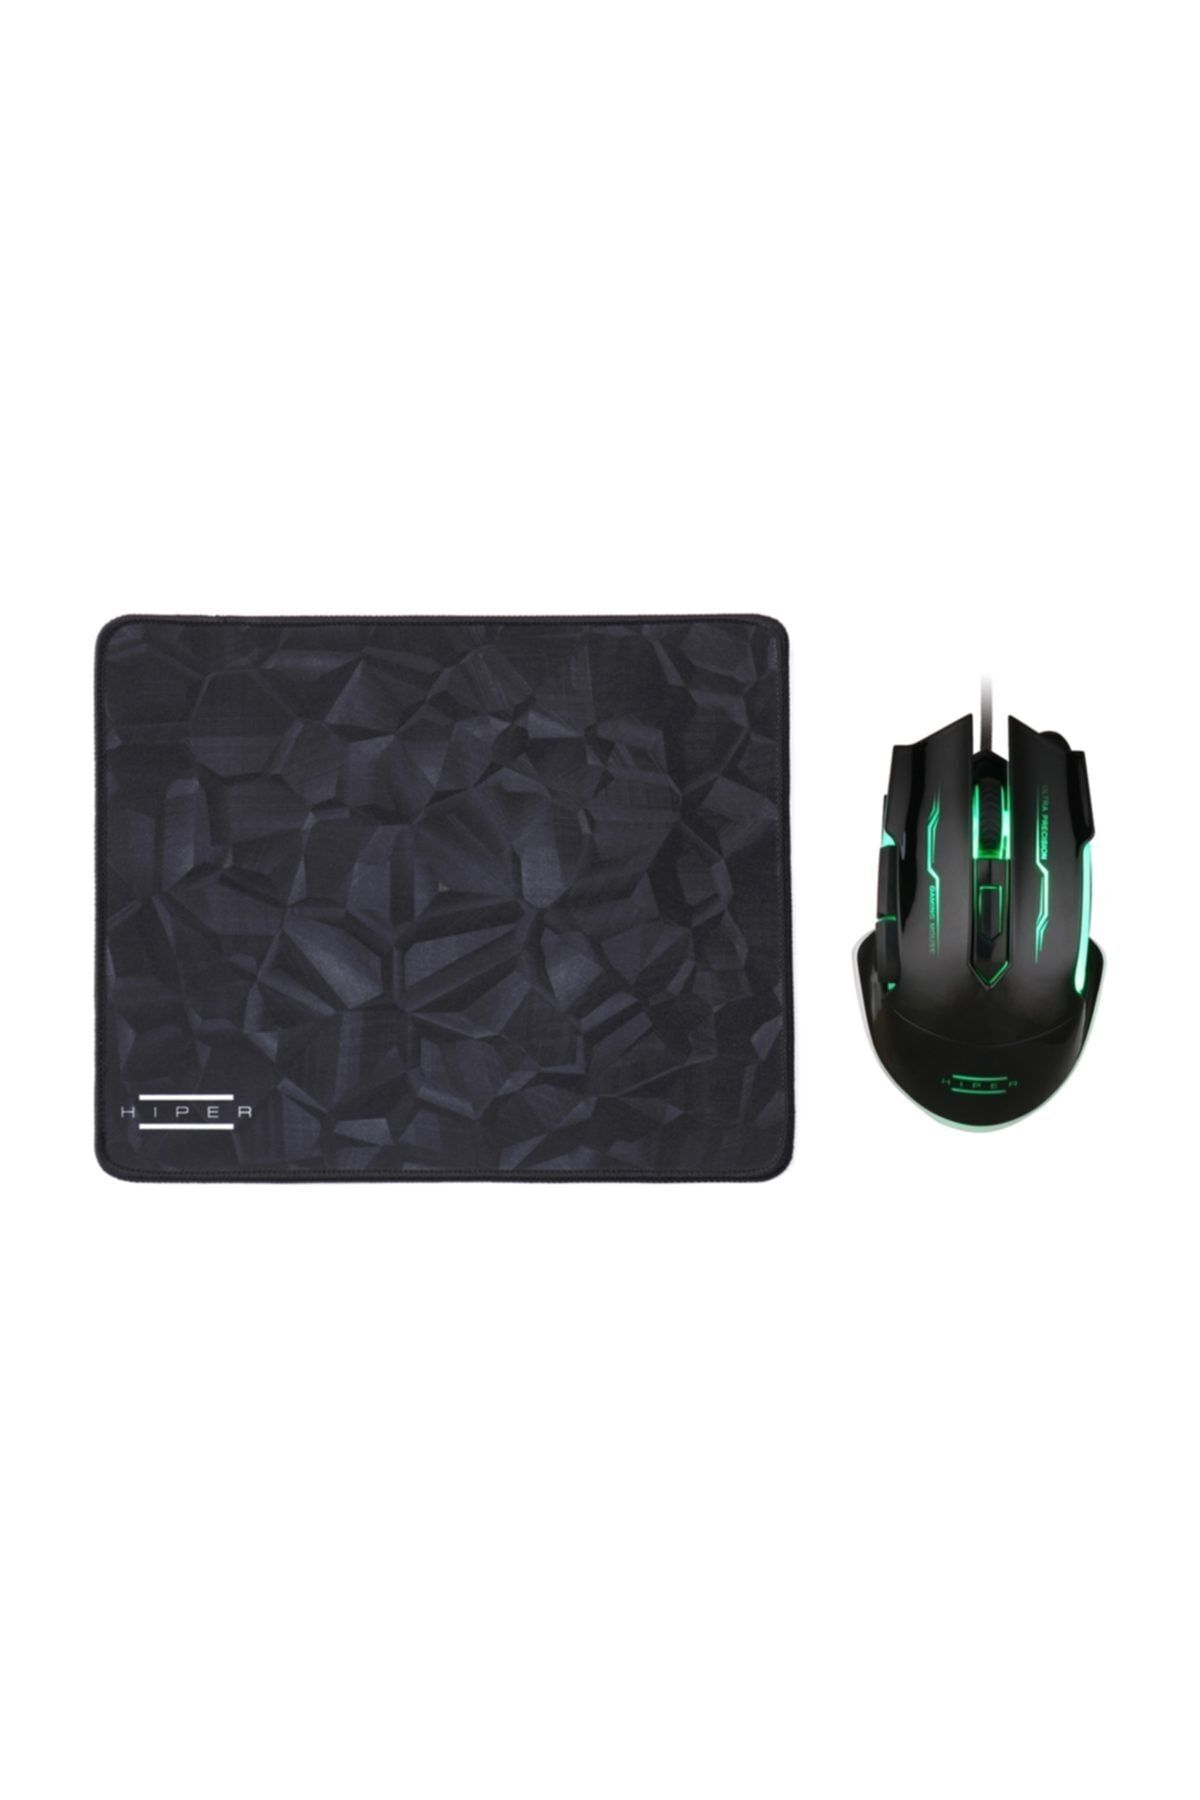 Hiper Hıper Black Wıdow X20 Gaming Mouse/mouse Pad Set Programlanabilir